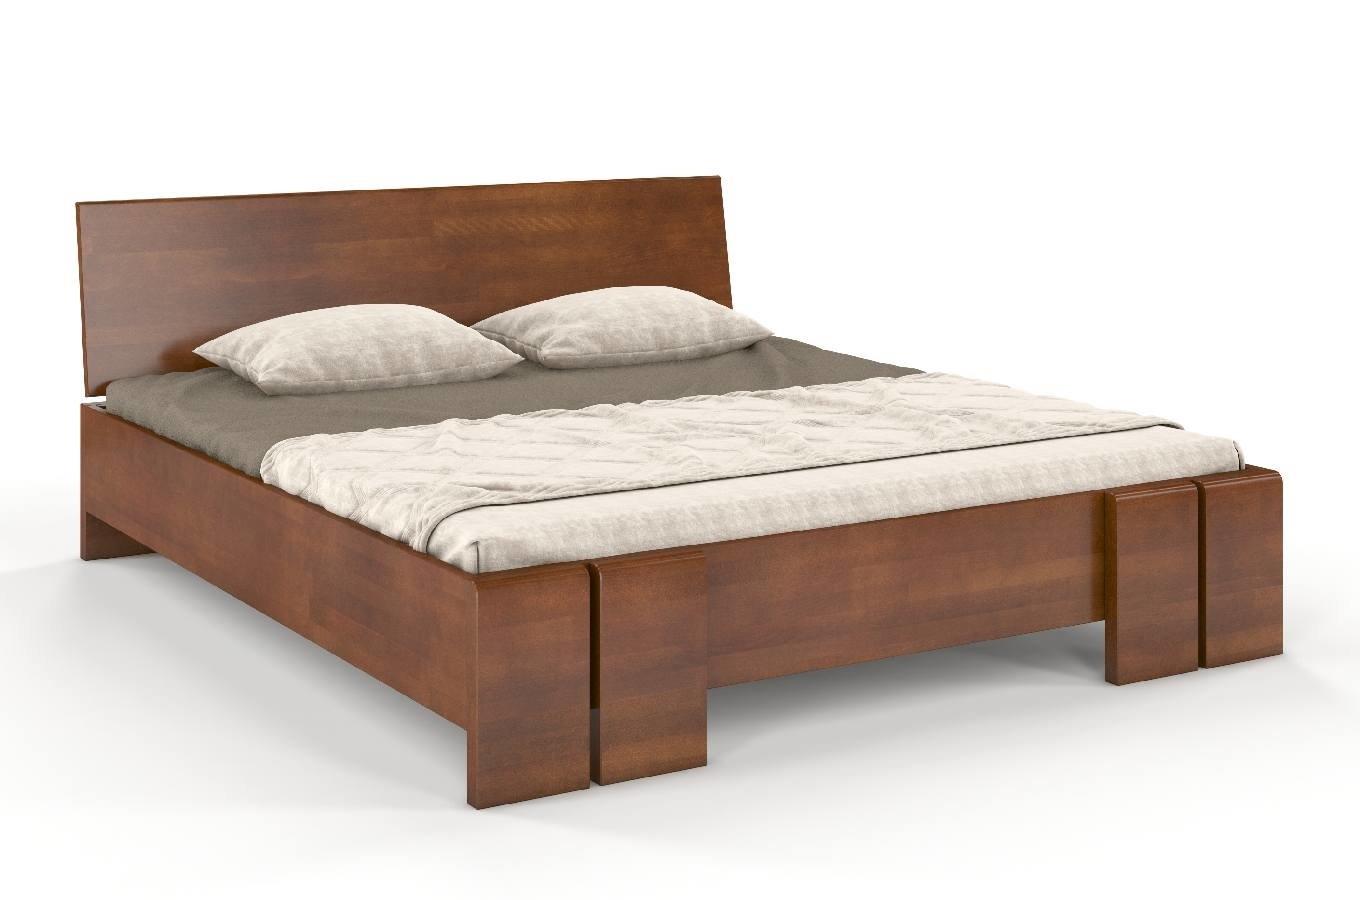 Łóżko drewniane bukowe Skandica VESTRE Maxi / 120x200 cm, kolor orzech